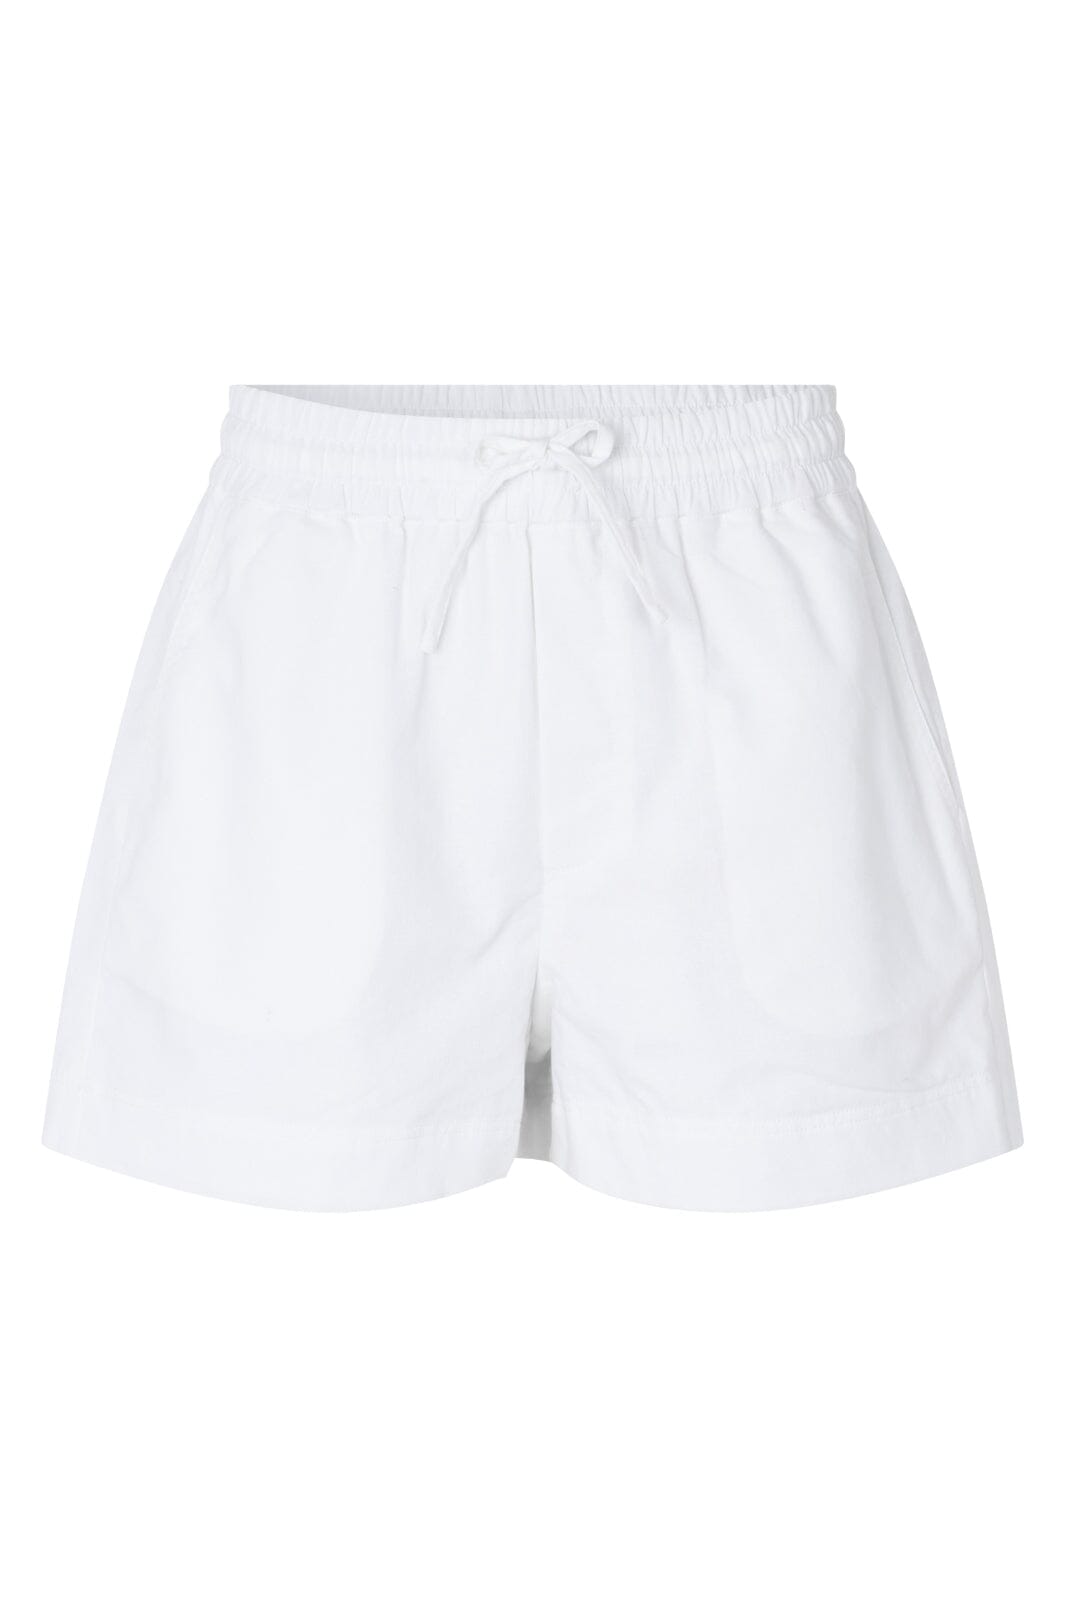 Mbym - Meris-M - 800 White Shorts 